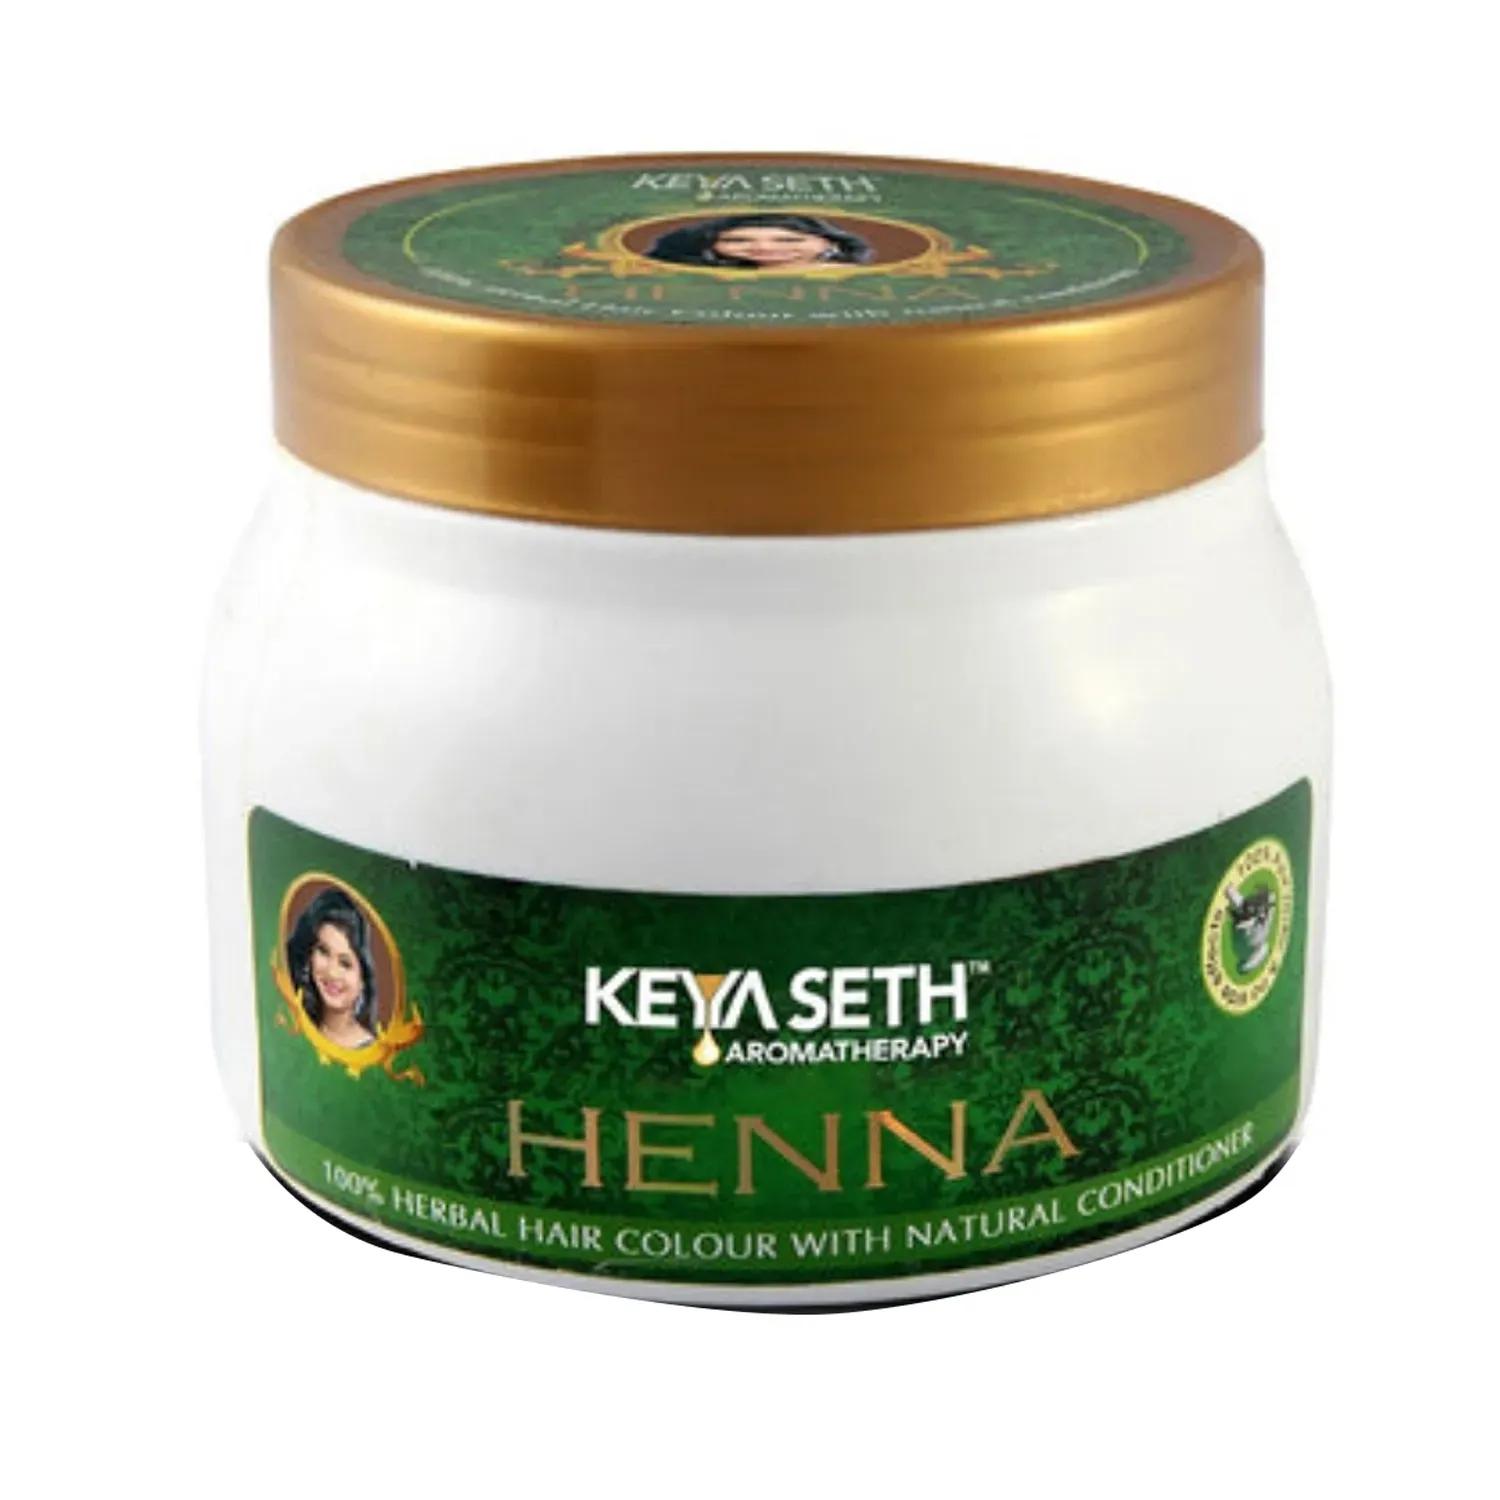 keya seth aromatherapy henna herbal hair color (200g)